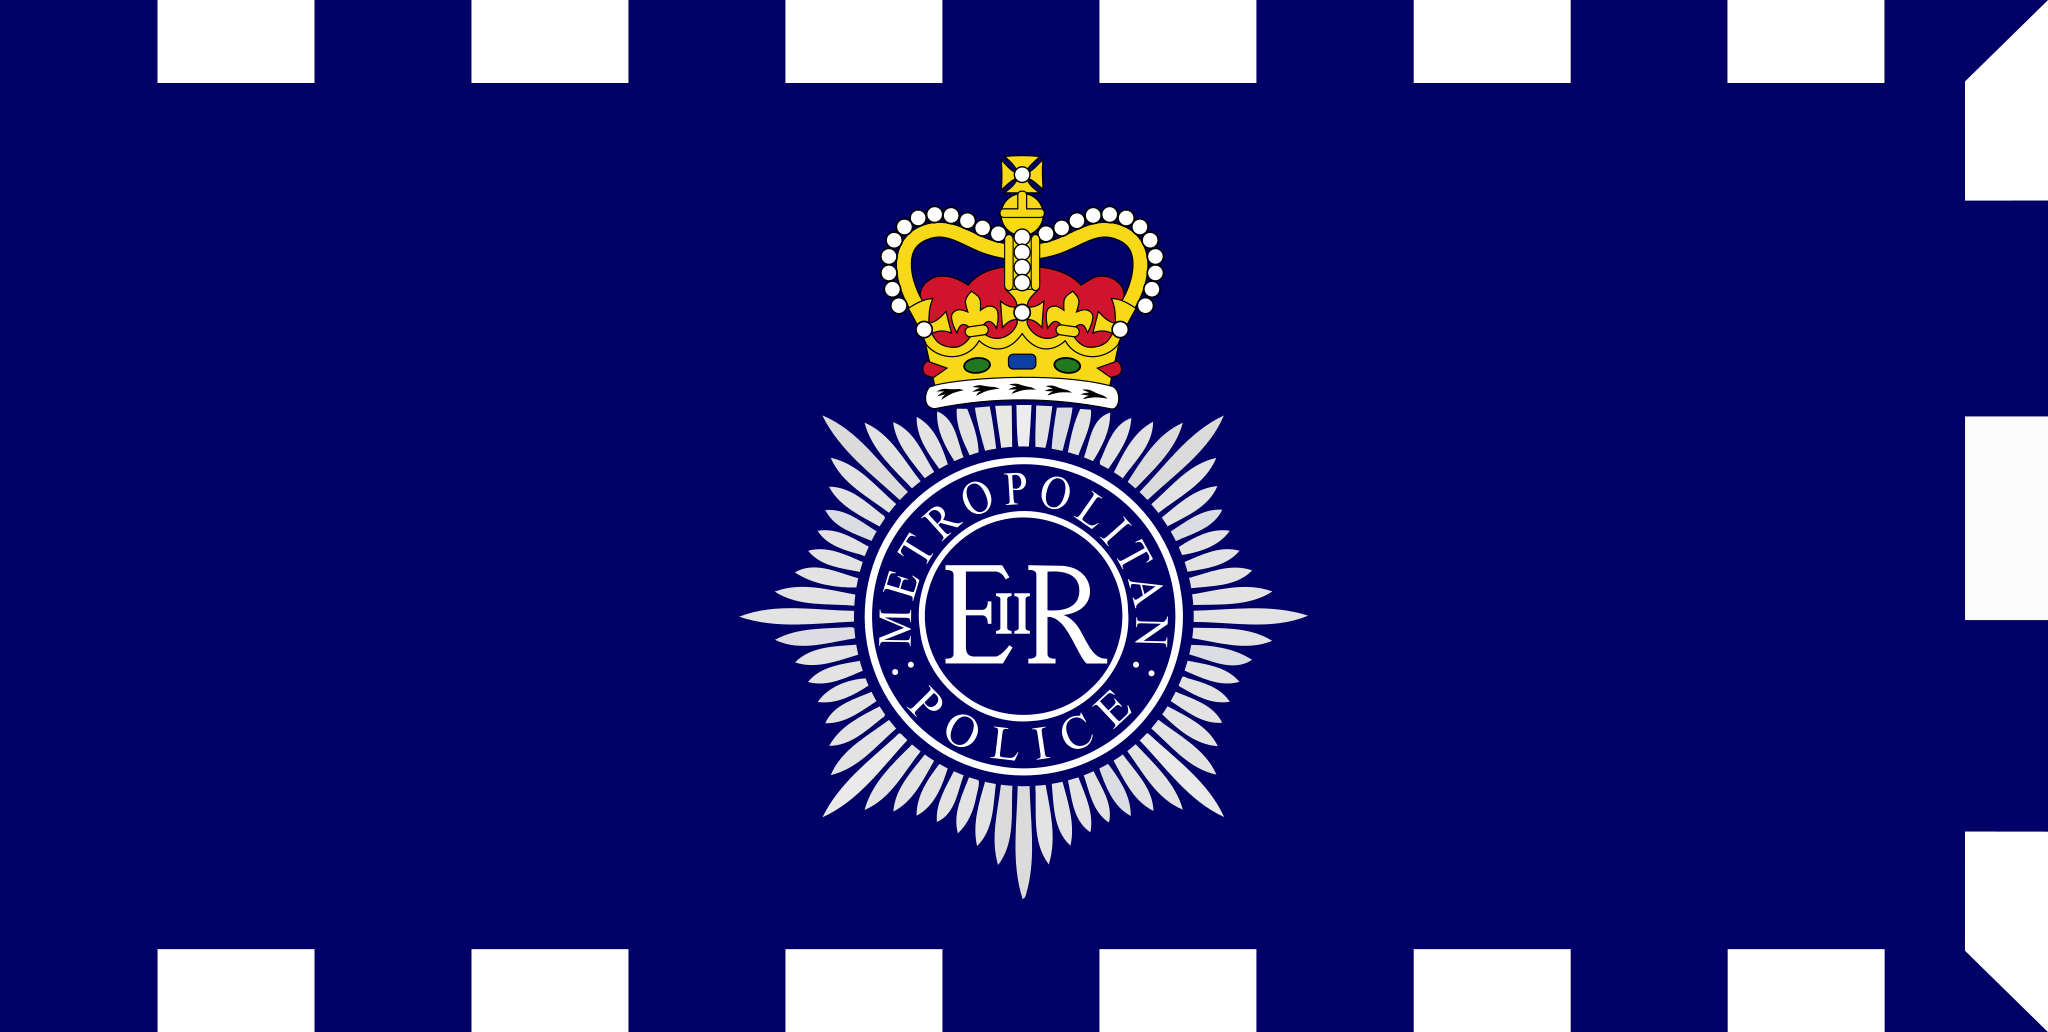 The Metroplitan police badge